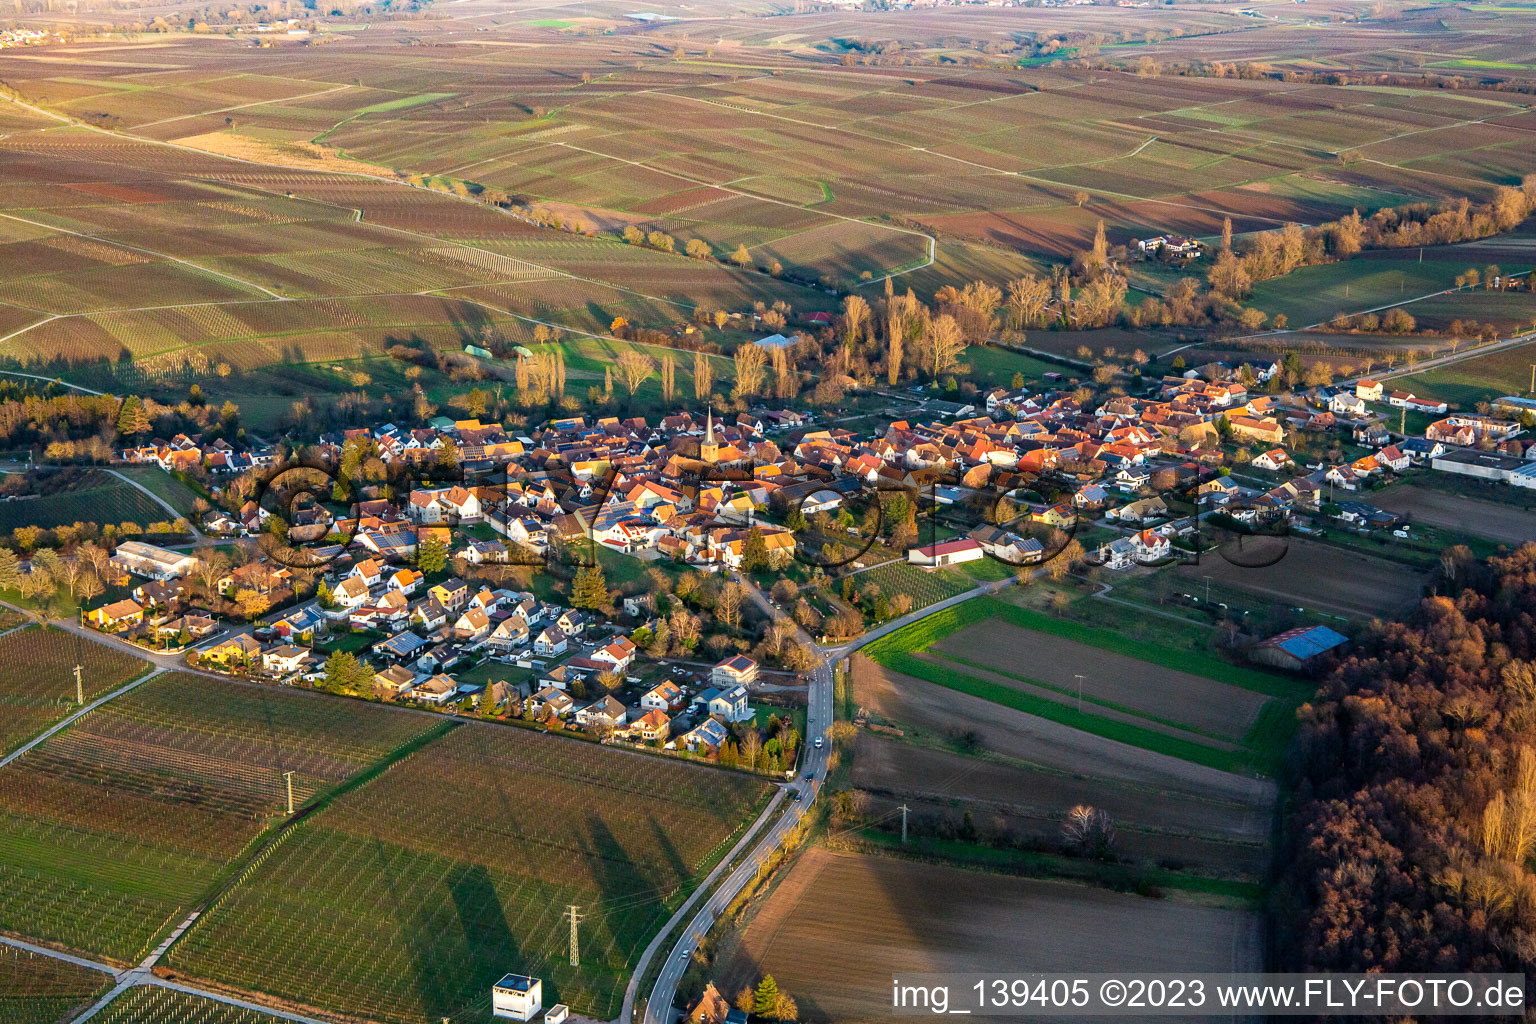 Aerial photograpy of From the southwest in the district Heuchelheim in Heuchelheim-Klingen in the state Rhineland-Palatinate, Germany